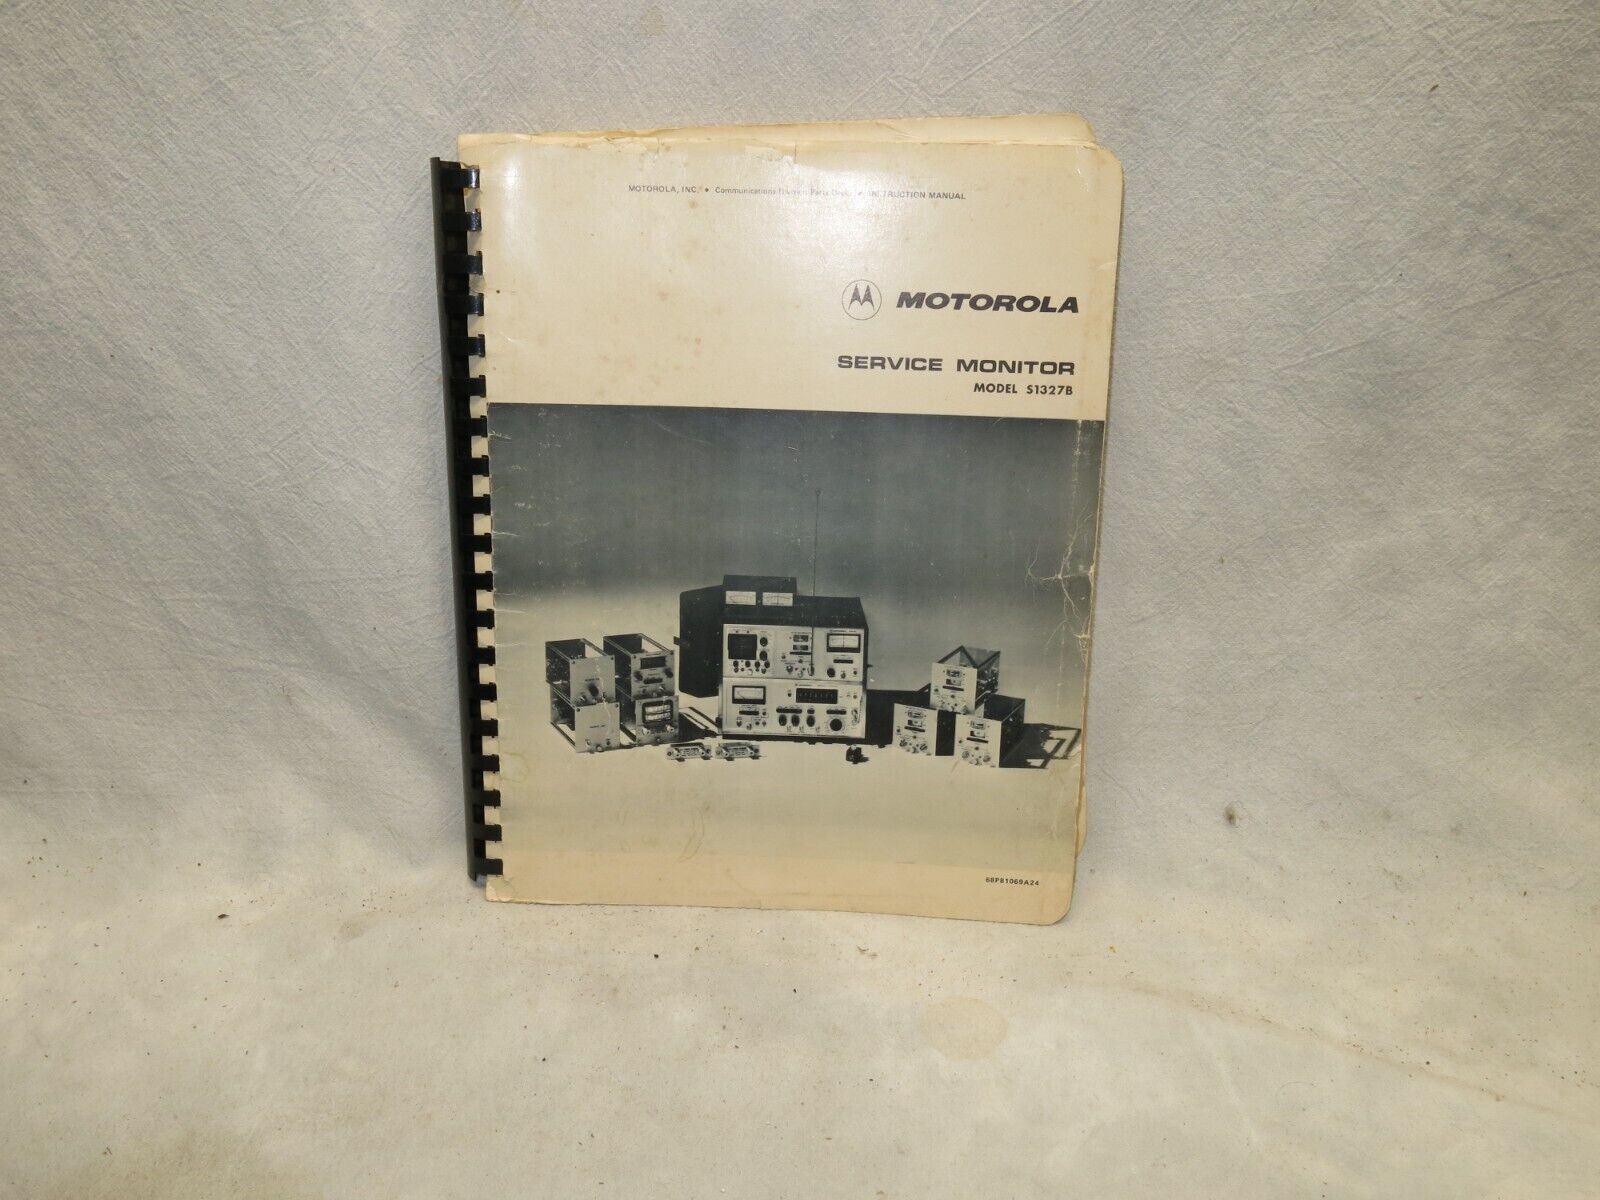 Vintage Motorola Service Monitor Service Manual, S1327B